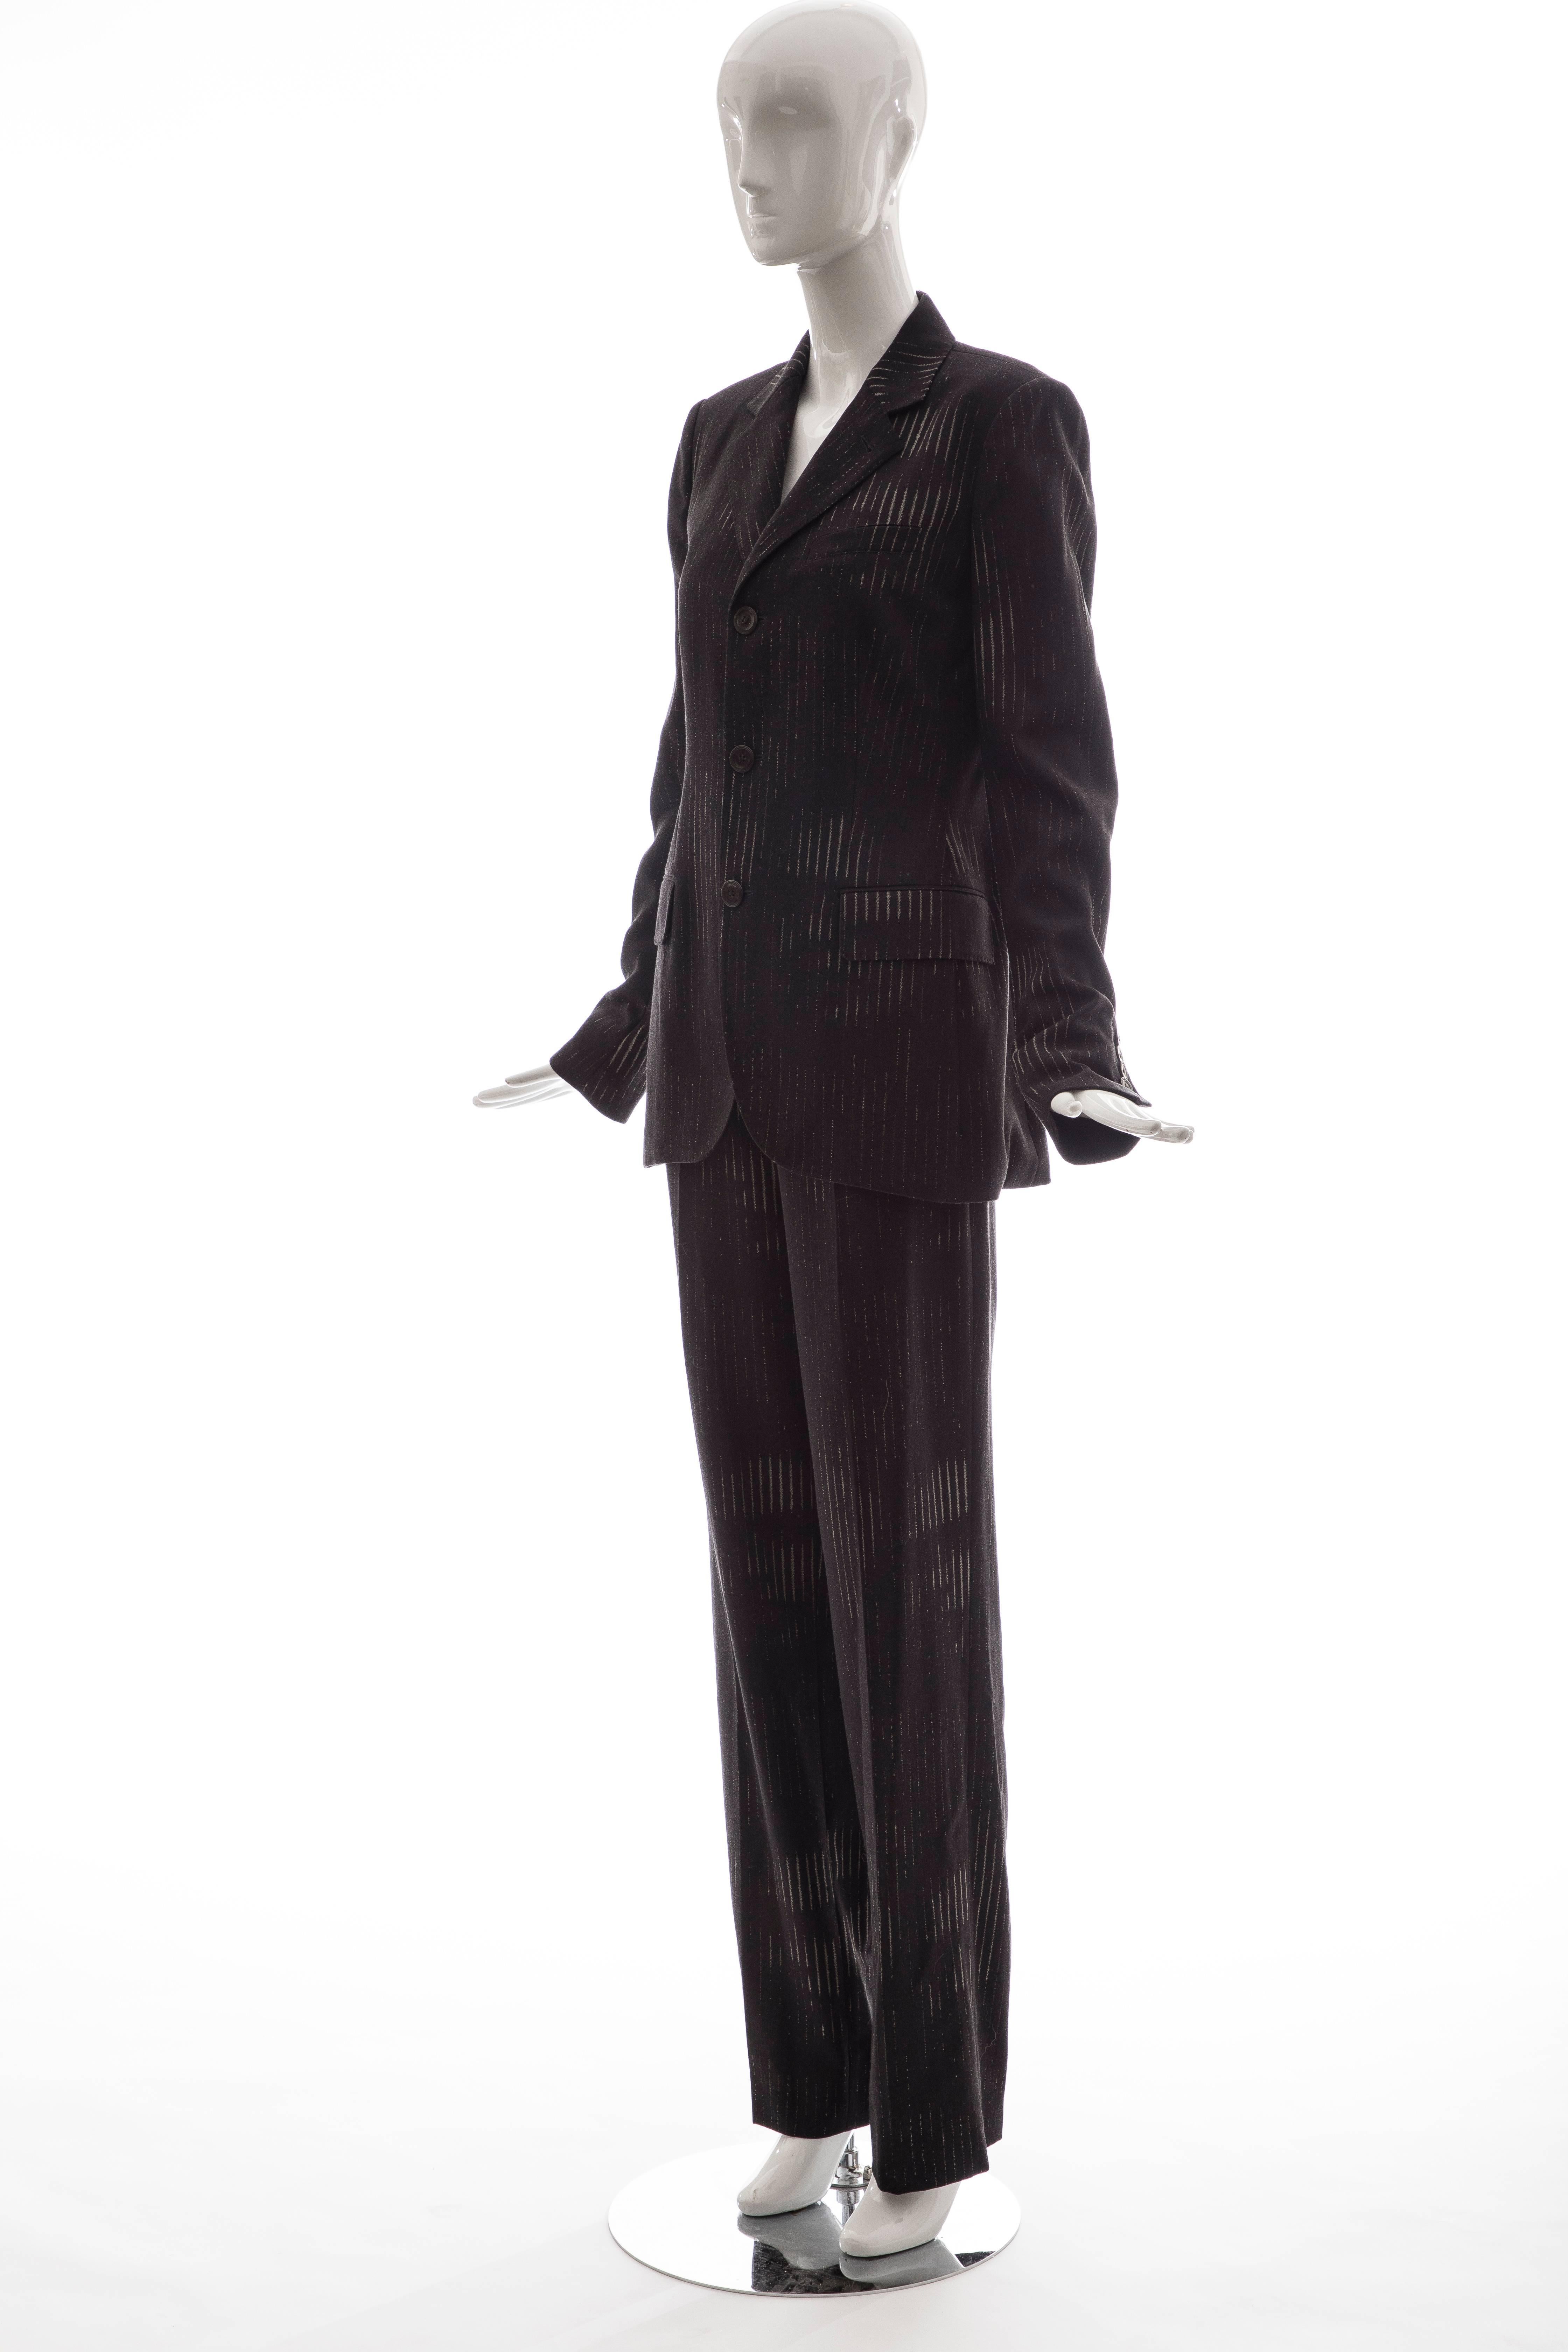 Jean Paul Gaultier 3D Printed Faces Wool Grey Pinstripe Pantsuit, Circa 1990's 3